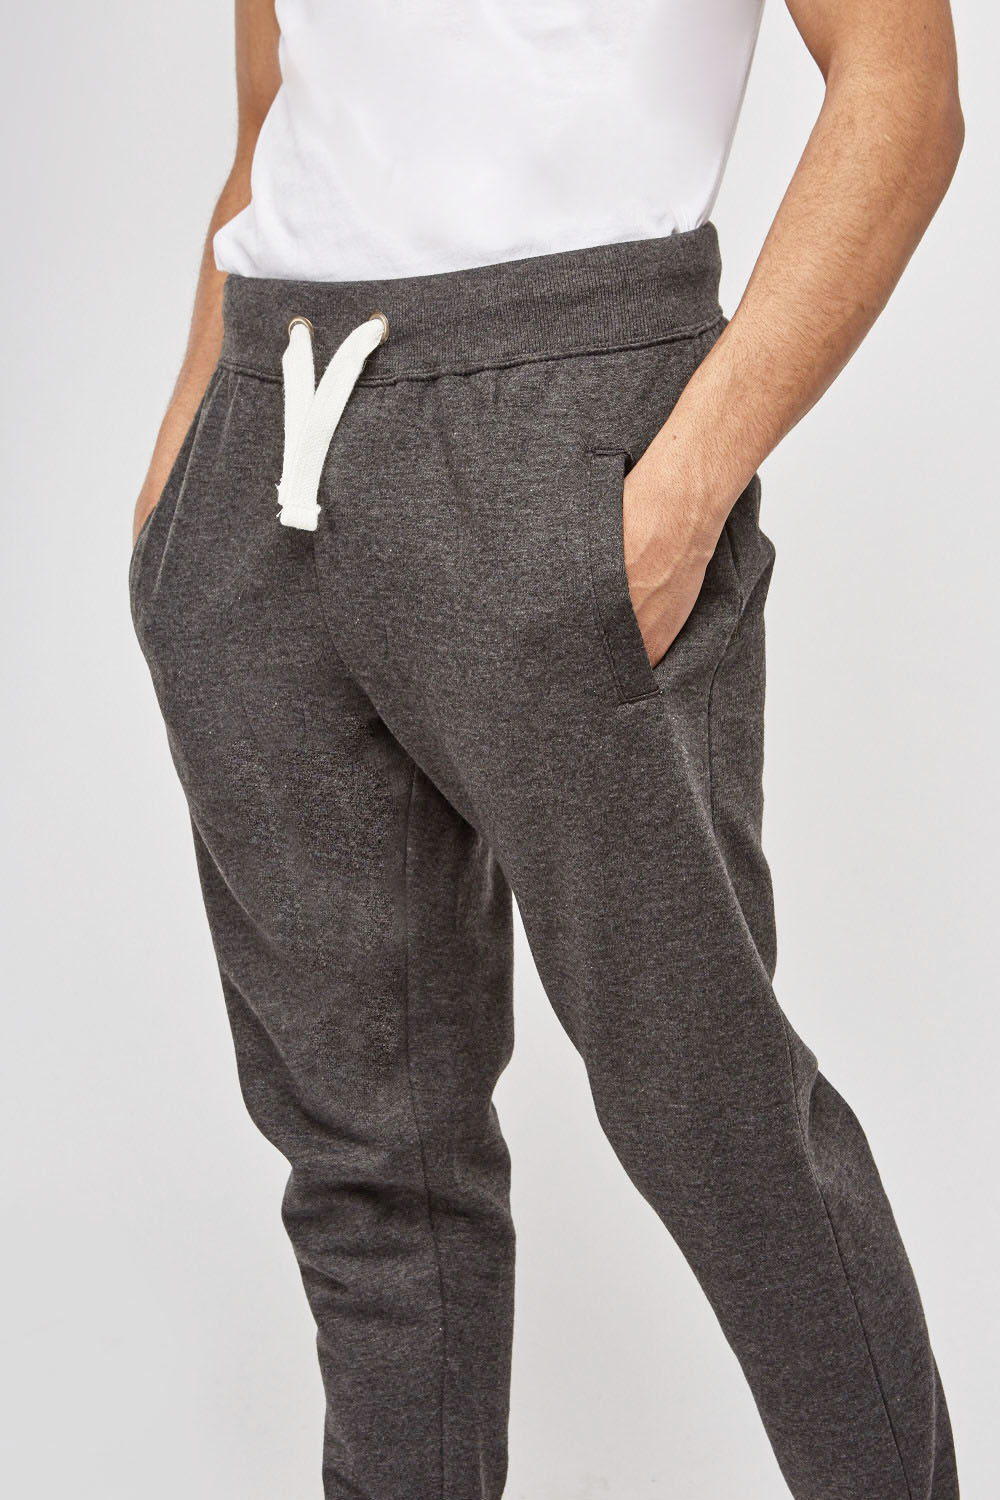 Fleece Lined Jogger Pants - Just $3